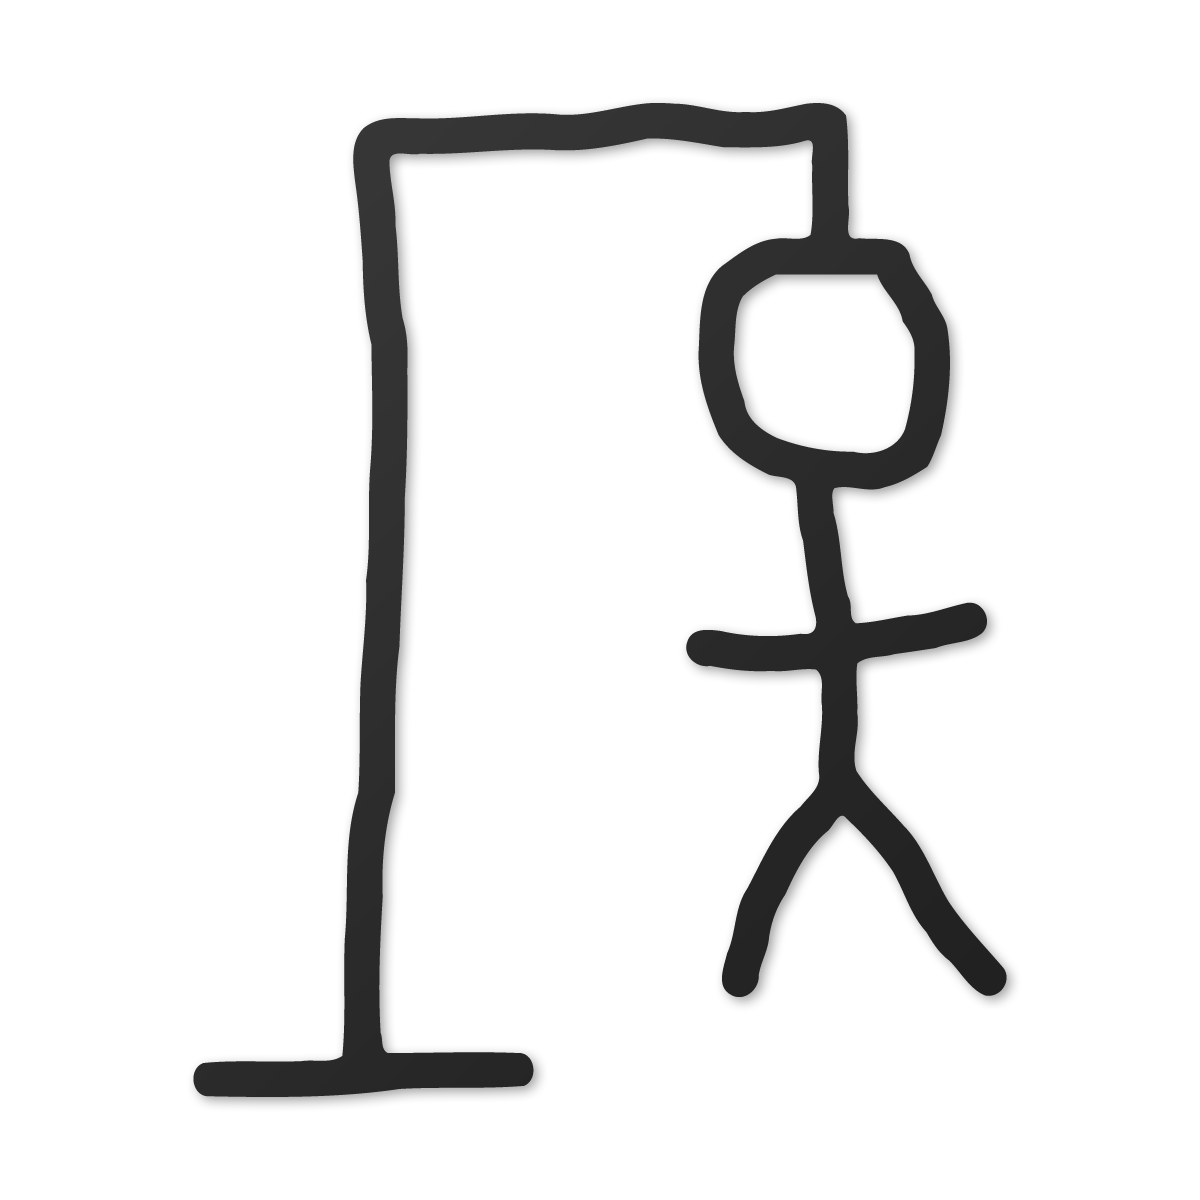 Stick Figure PNG Image File